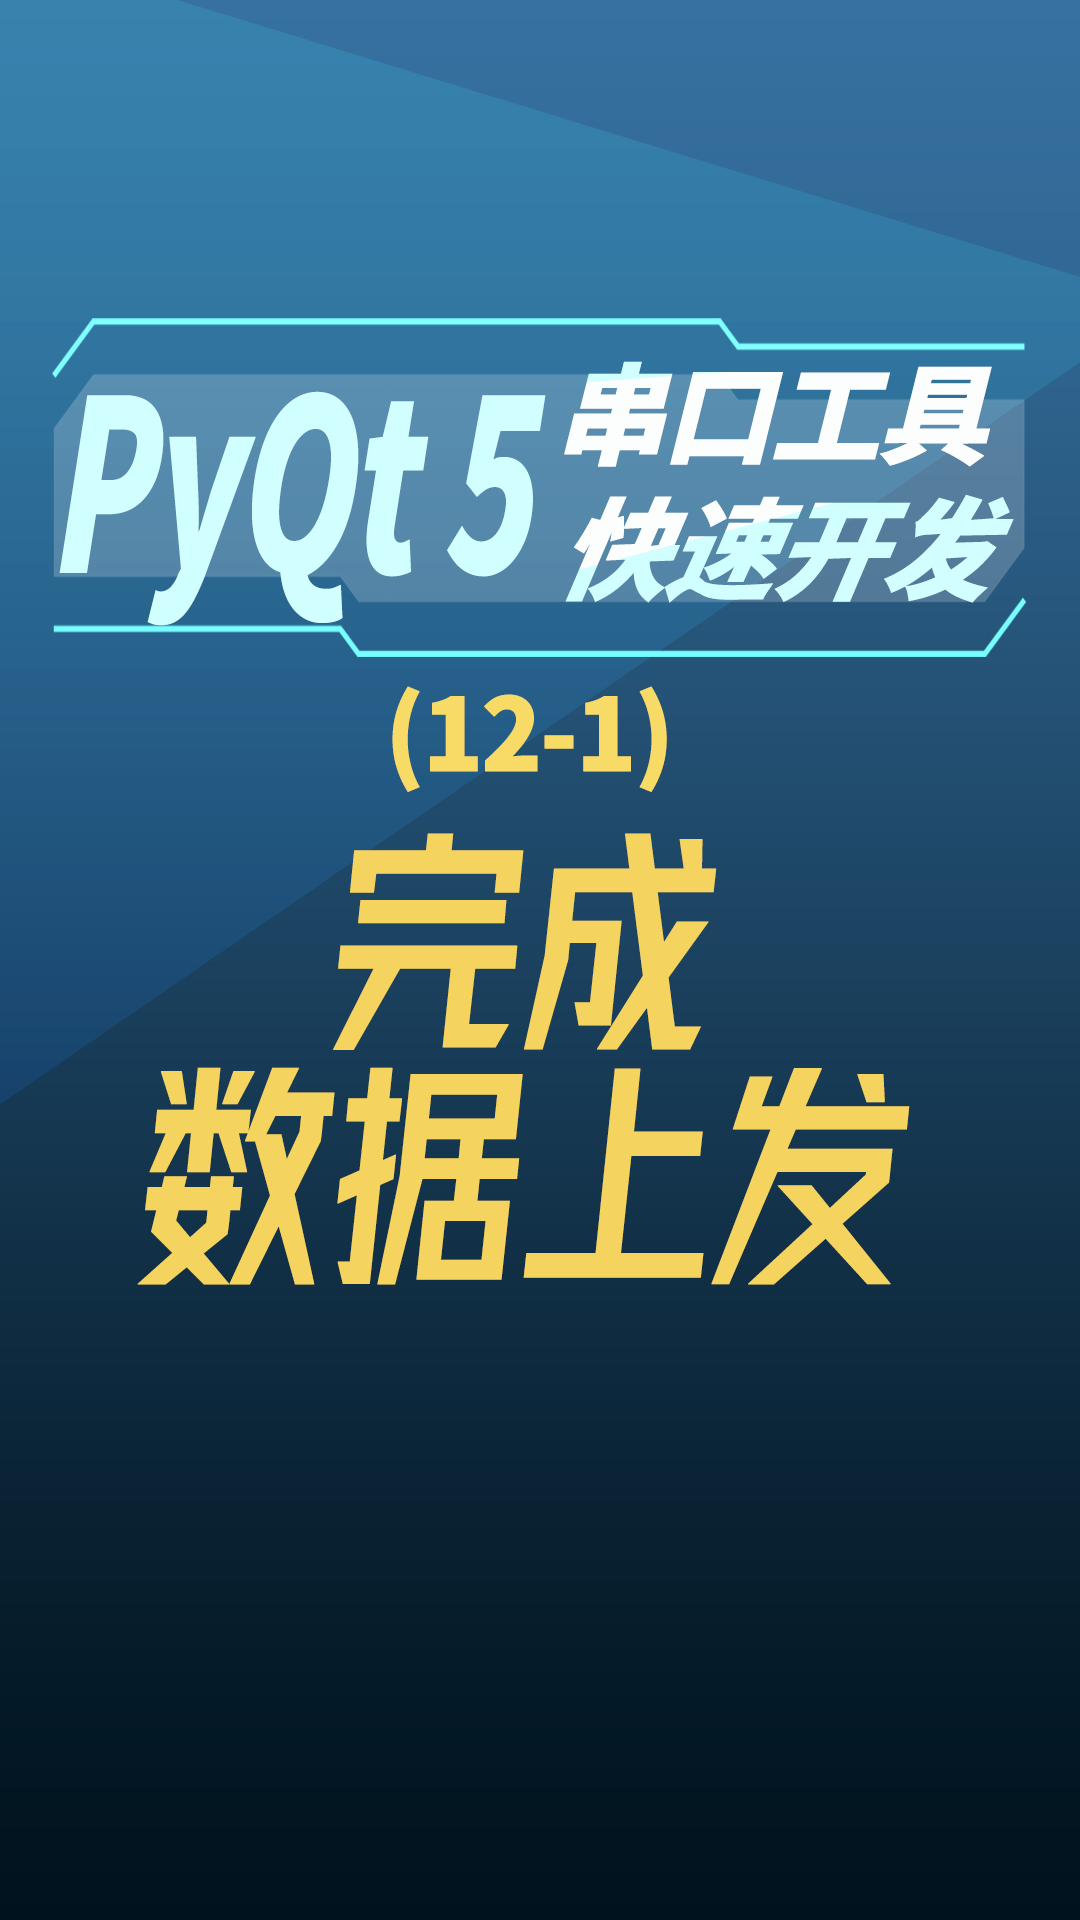 pyqt5串口工具快速开发12-1完成数据上发#串口工具开发 